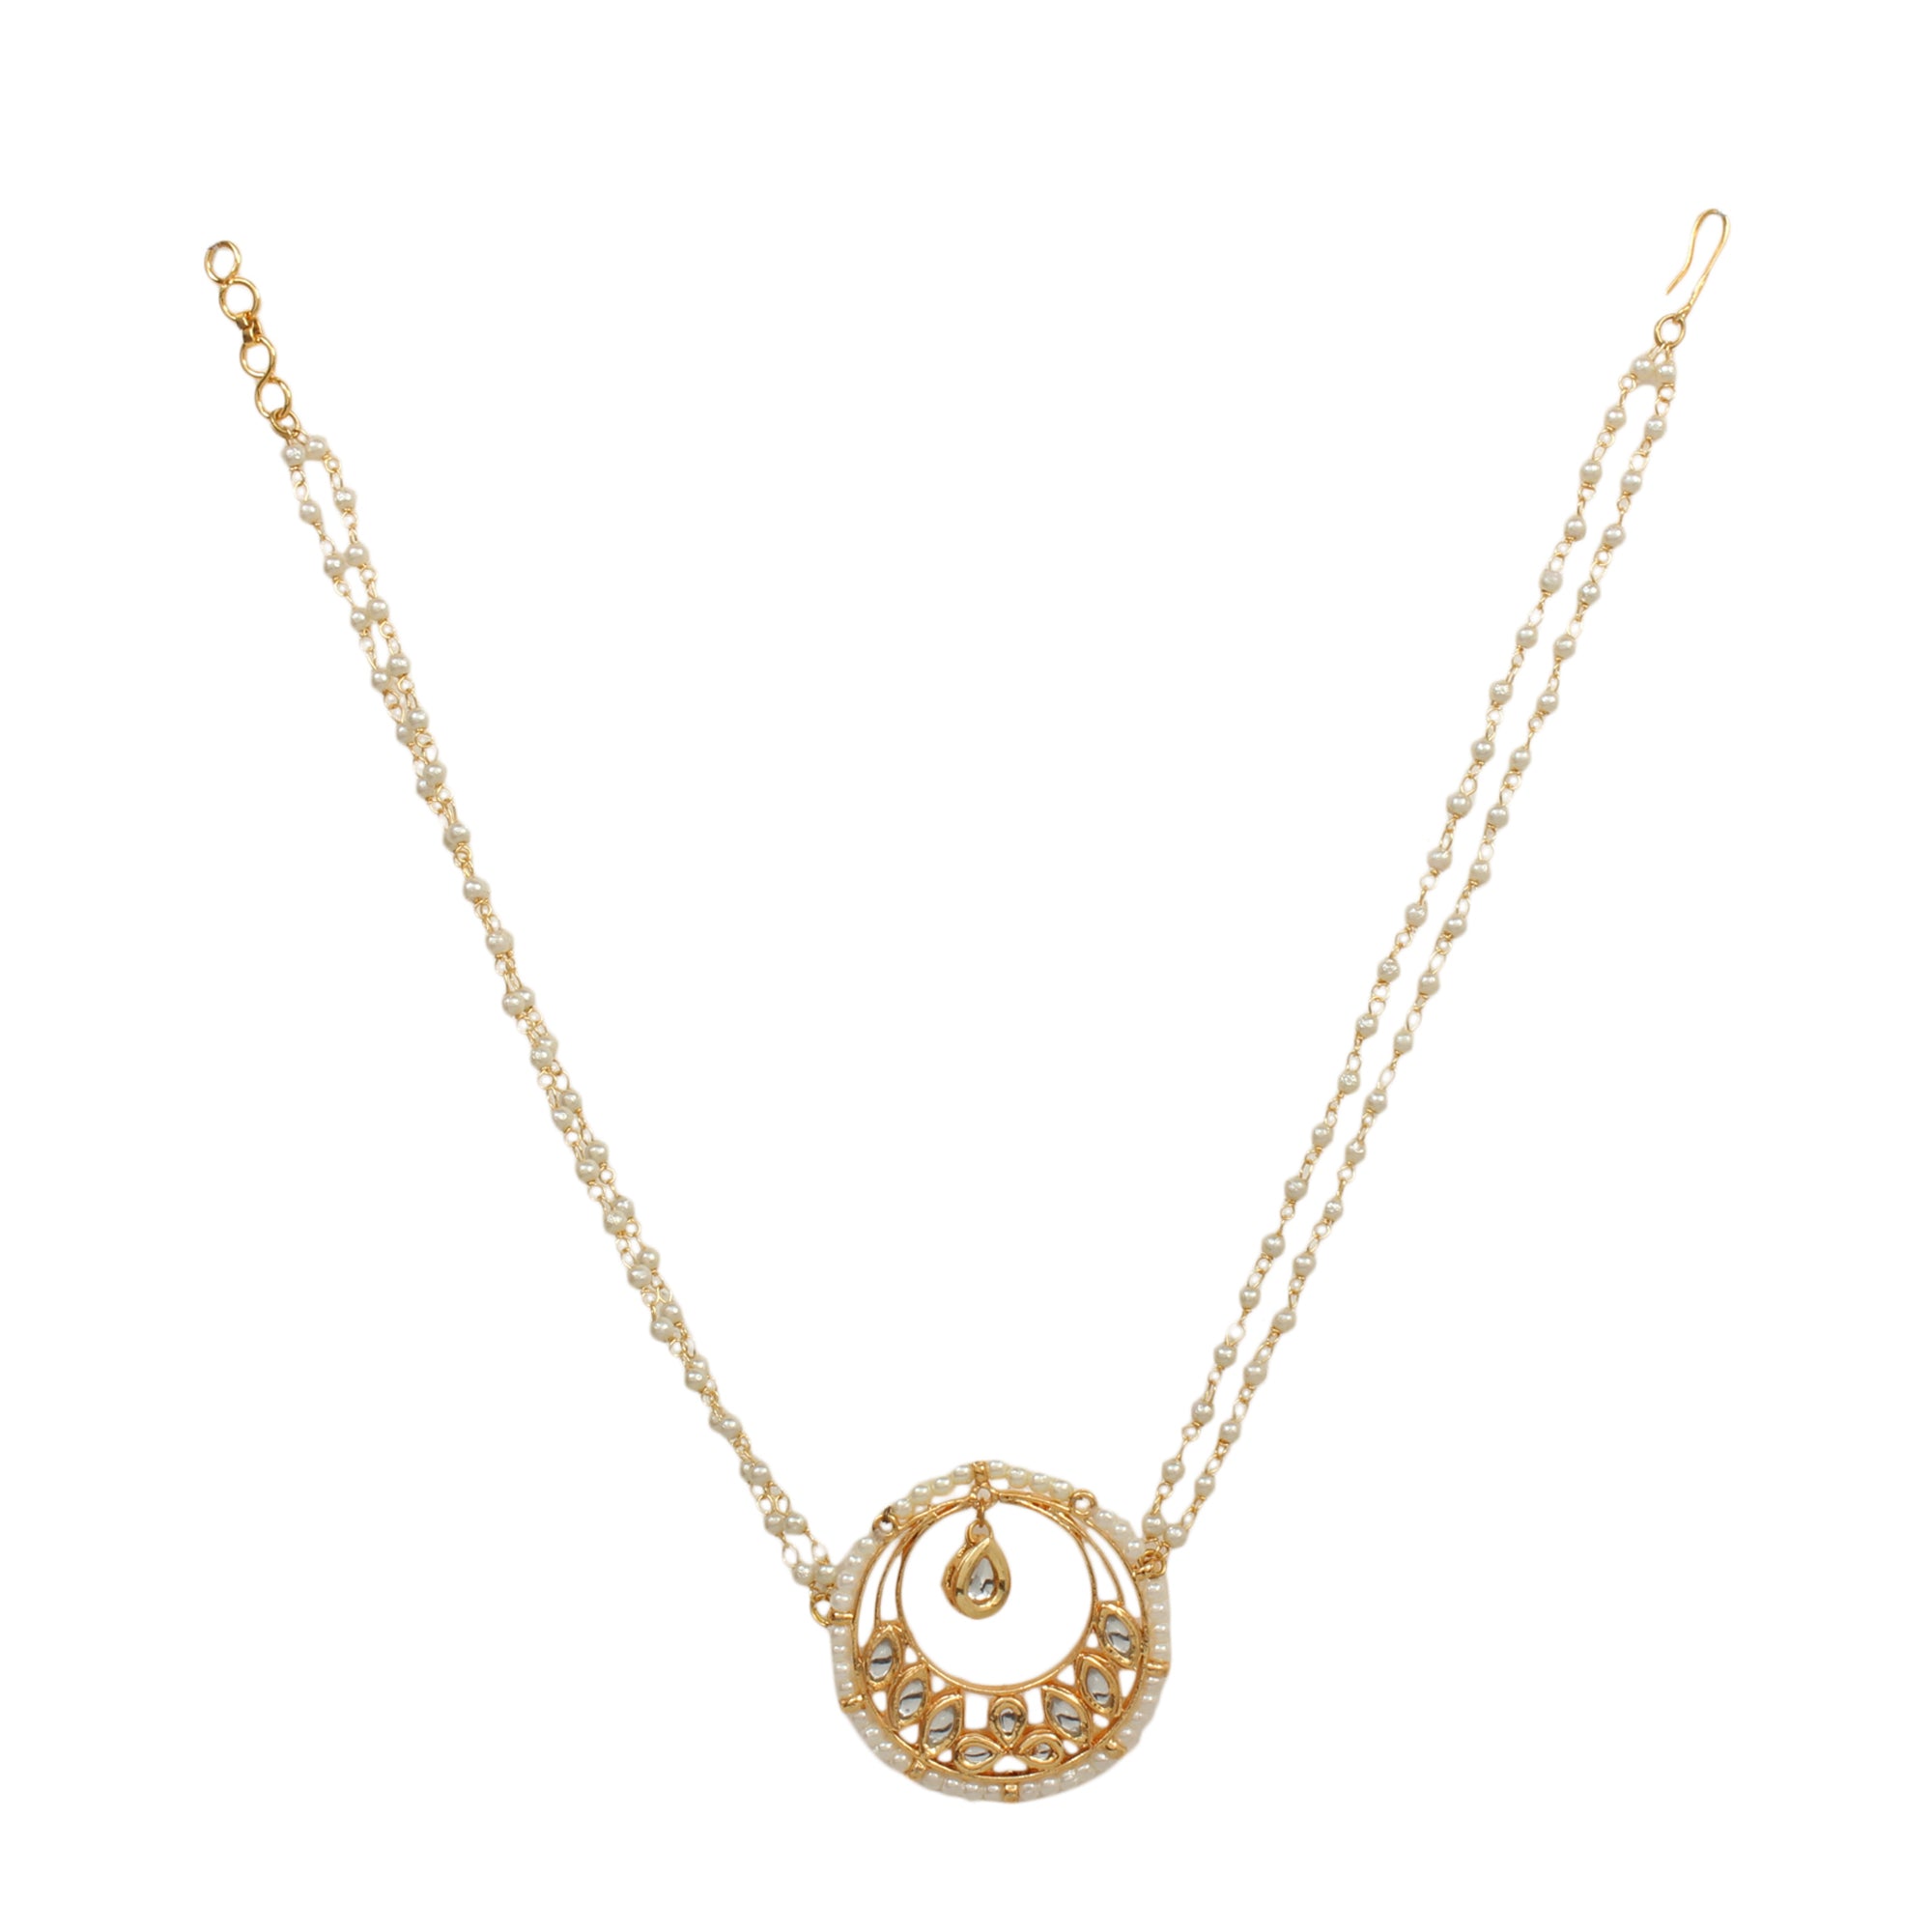 Sleek moon shaped kundan inspired choker teamed with pearl beaded necklace